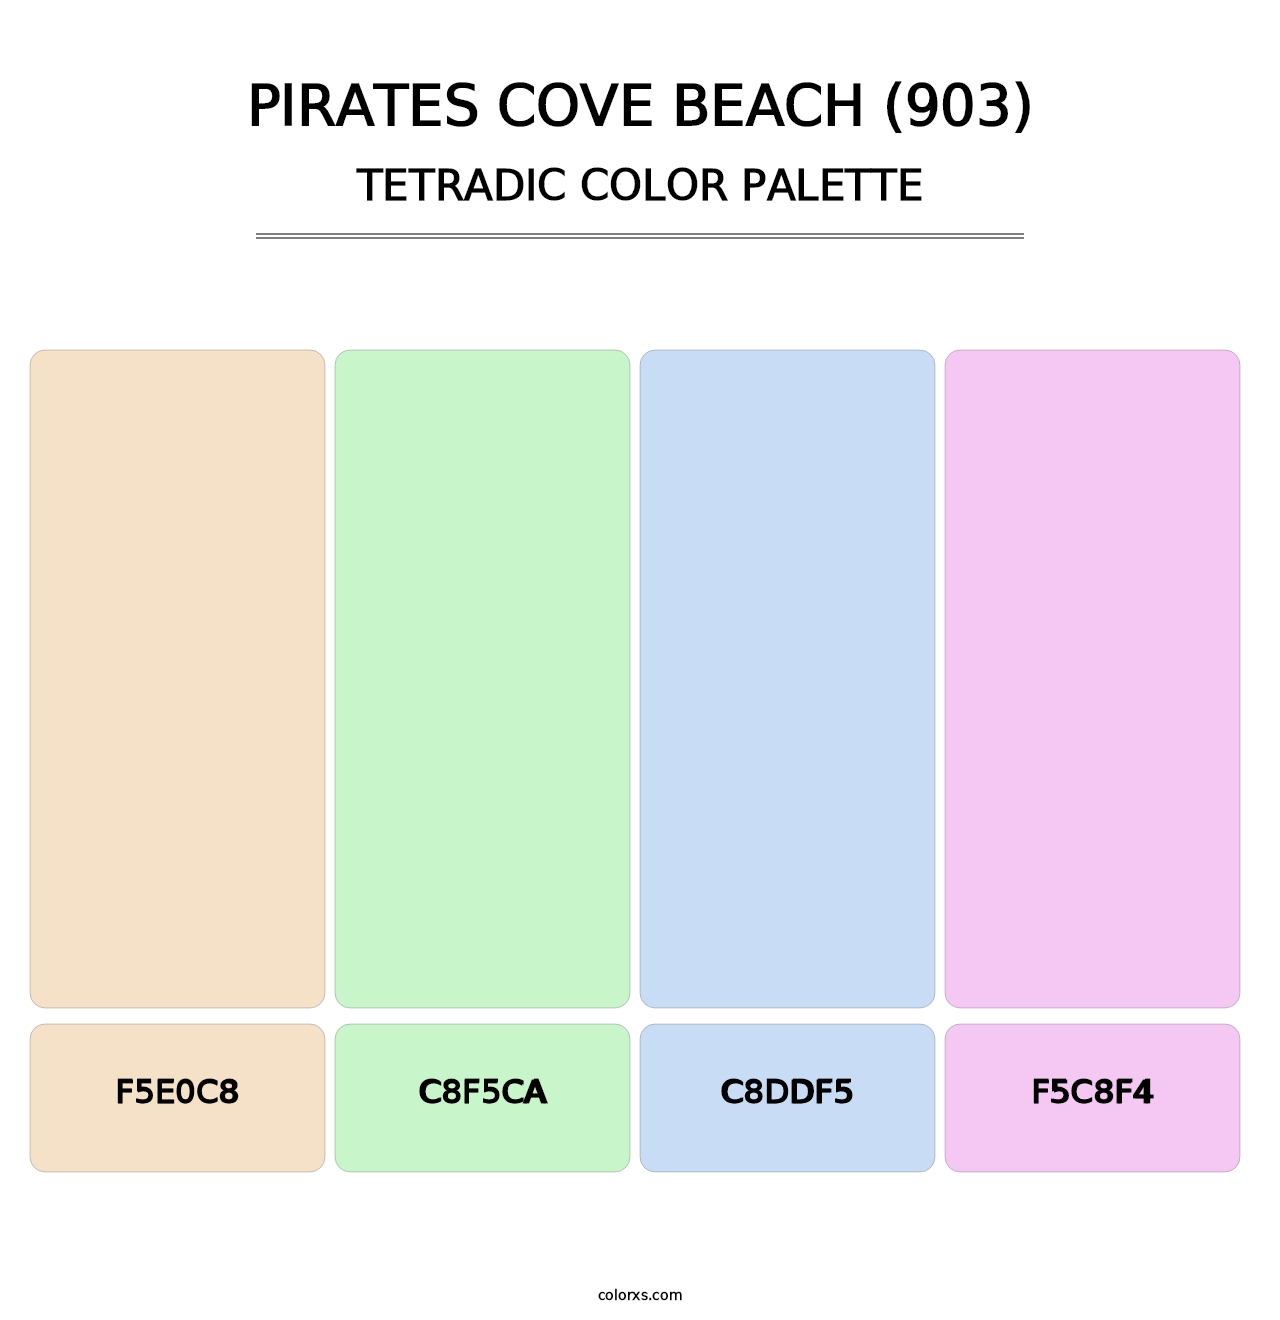 Pirates Cove Beach (903) - Tetradic Color Palette